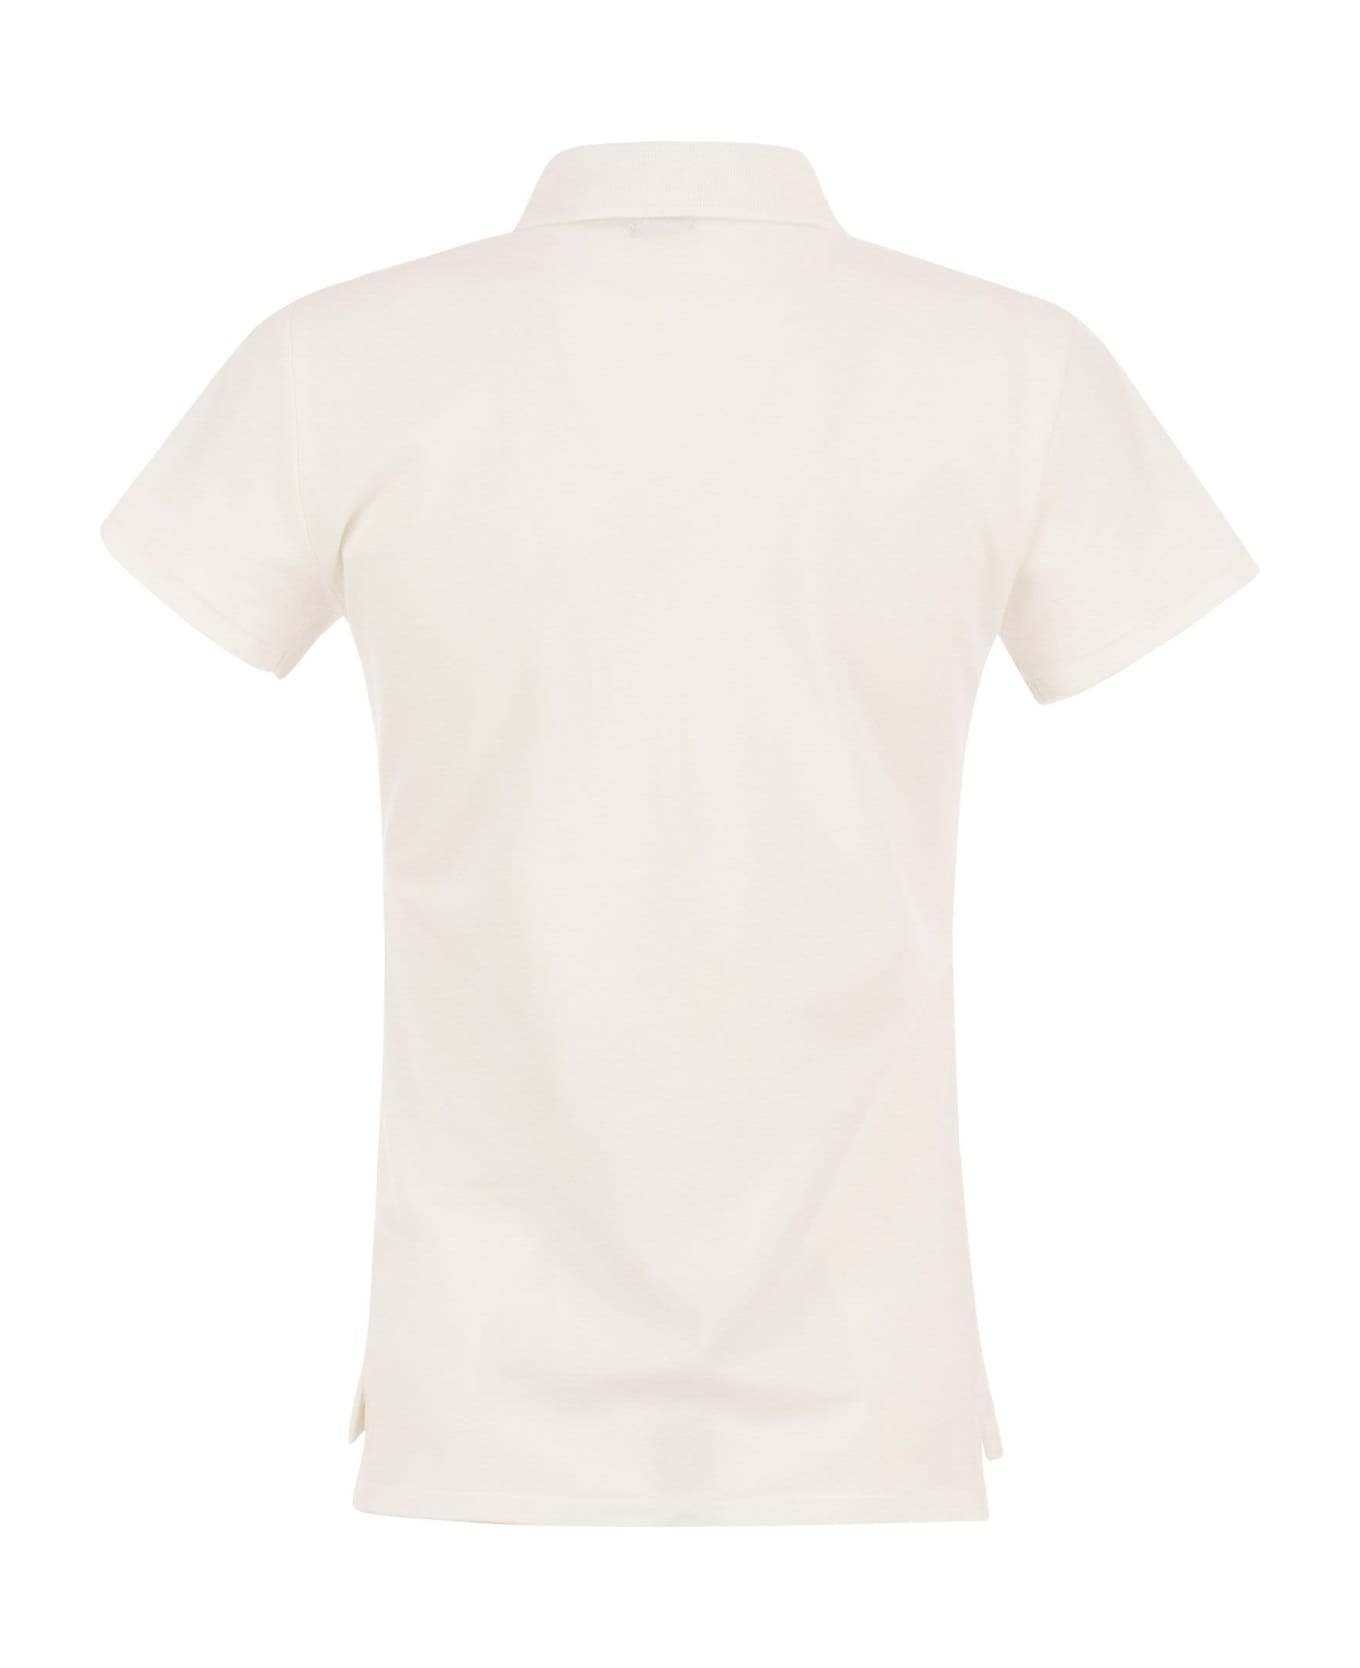 Polo Ralph Lauren Stretch Cotton Piqué Polo Shirt - White ポロシャツ